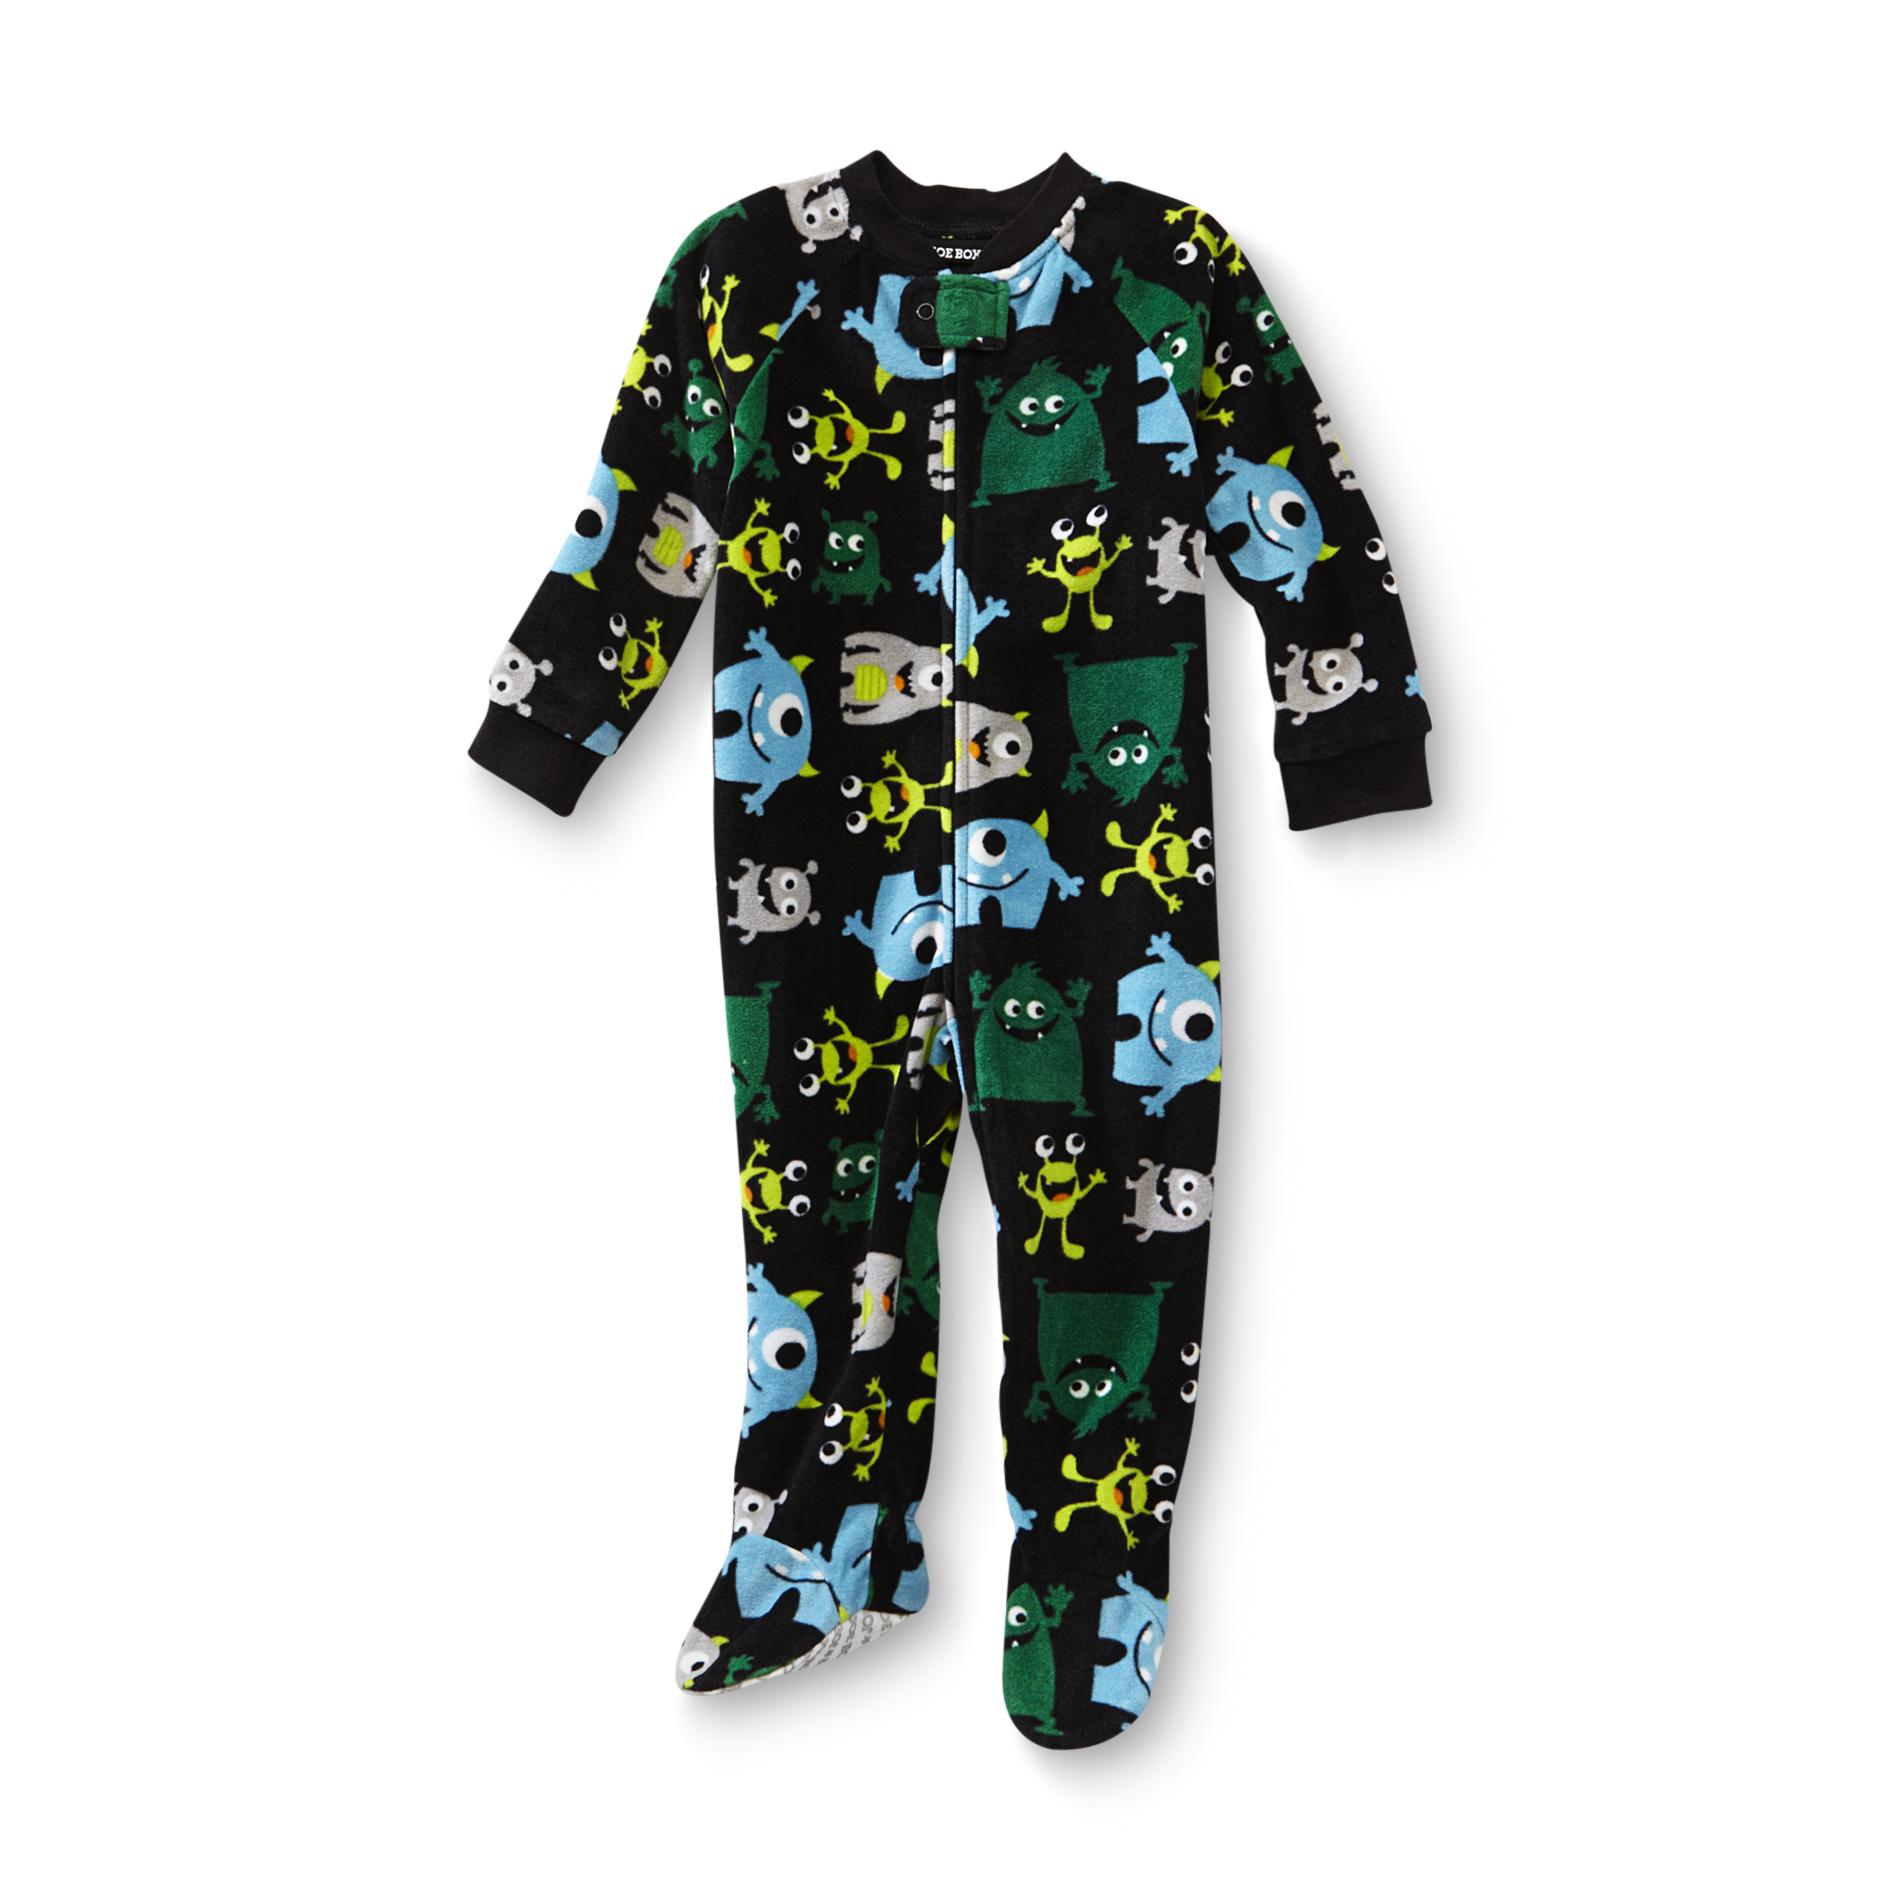 Joe Boxer Infant & Toddler Boy's Footed Sleeper Pajamas - Monsters